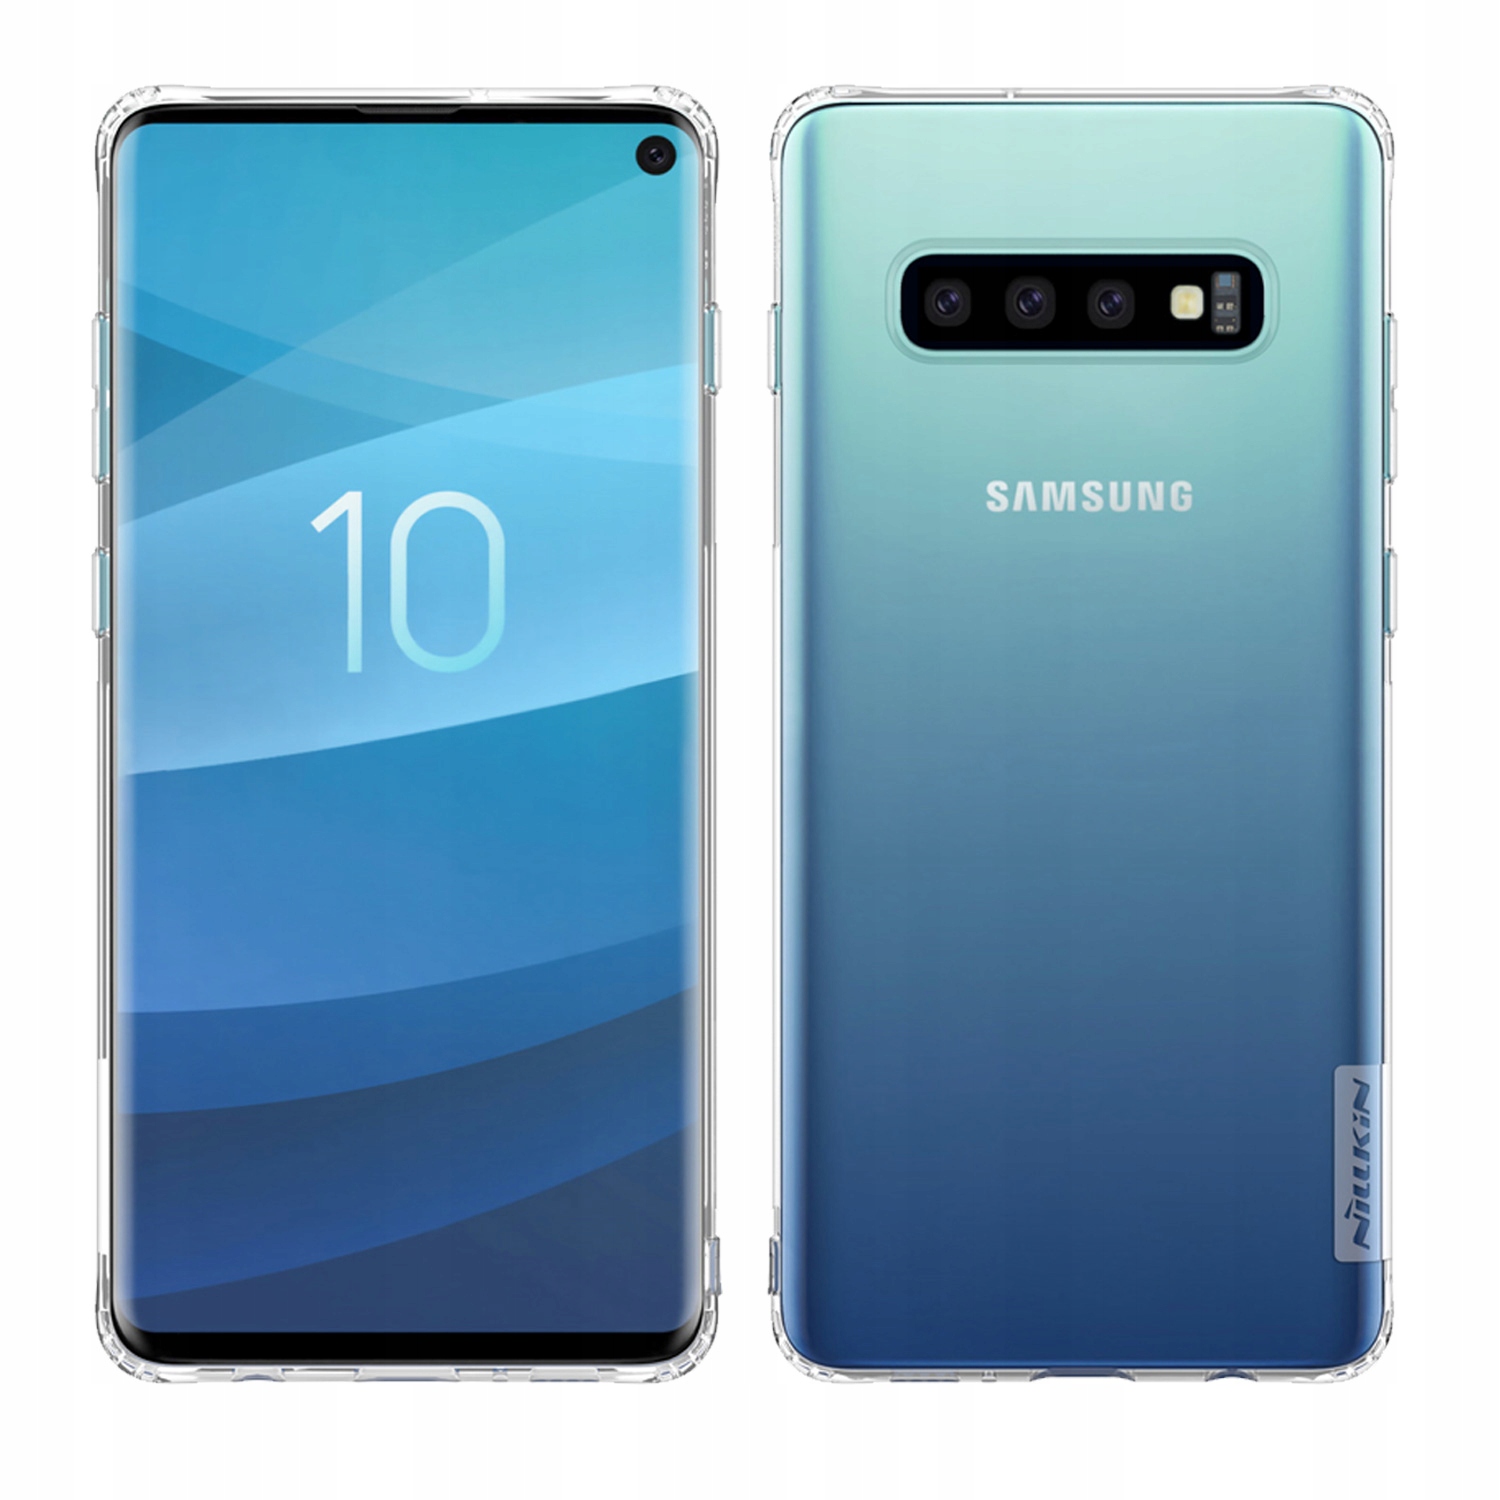 Самсунг новая 10. Samsung Galaxy s10. Samsung Galaxy s10 Plus. A10s Samsung Price. Смартфон Samsung Galaxy a10s.